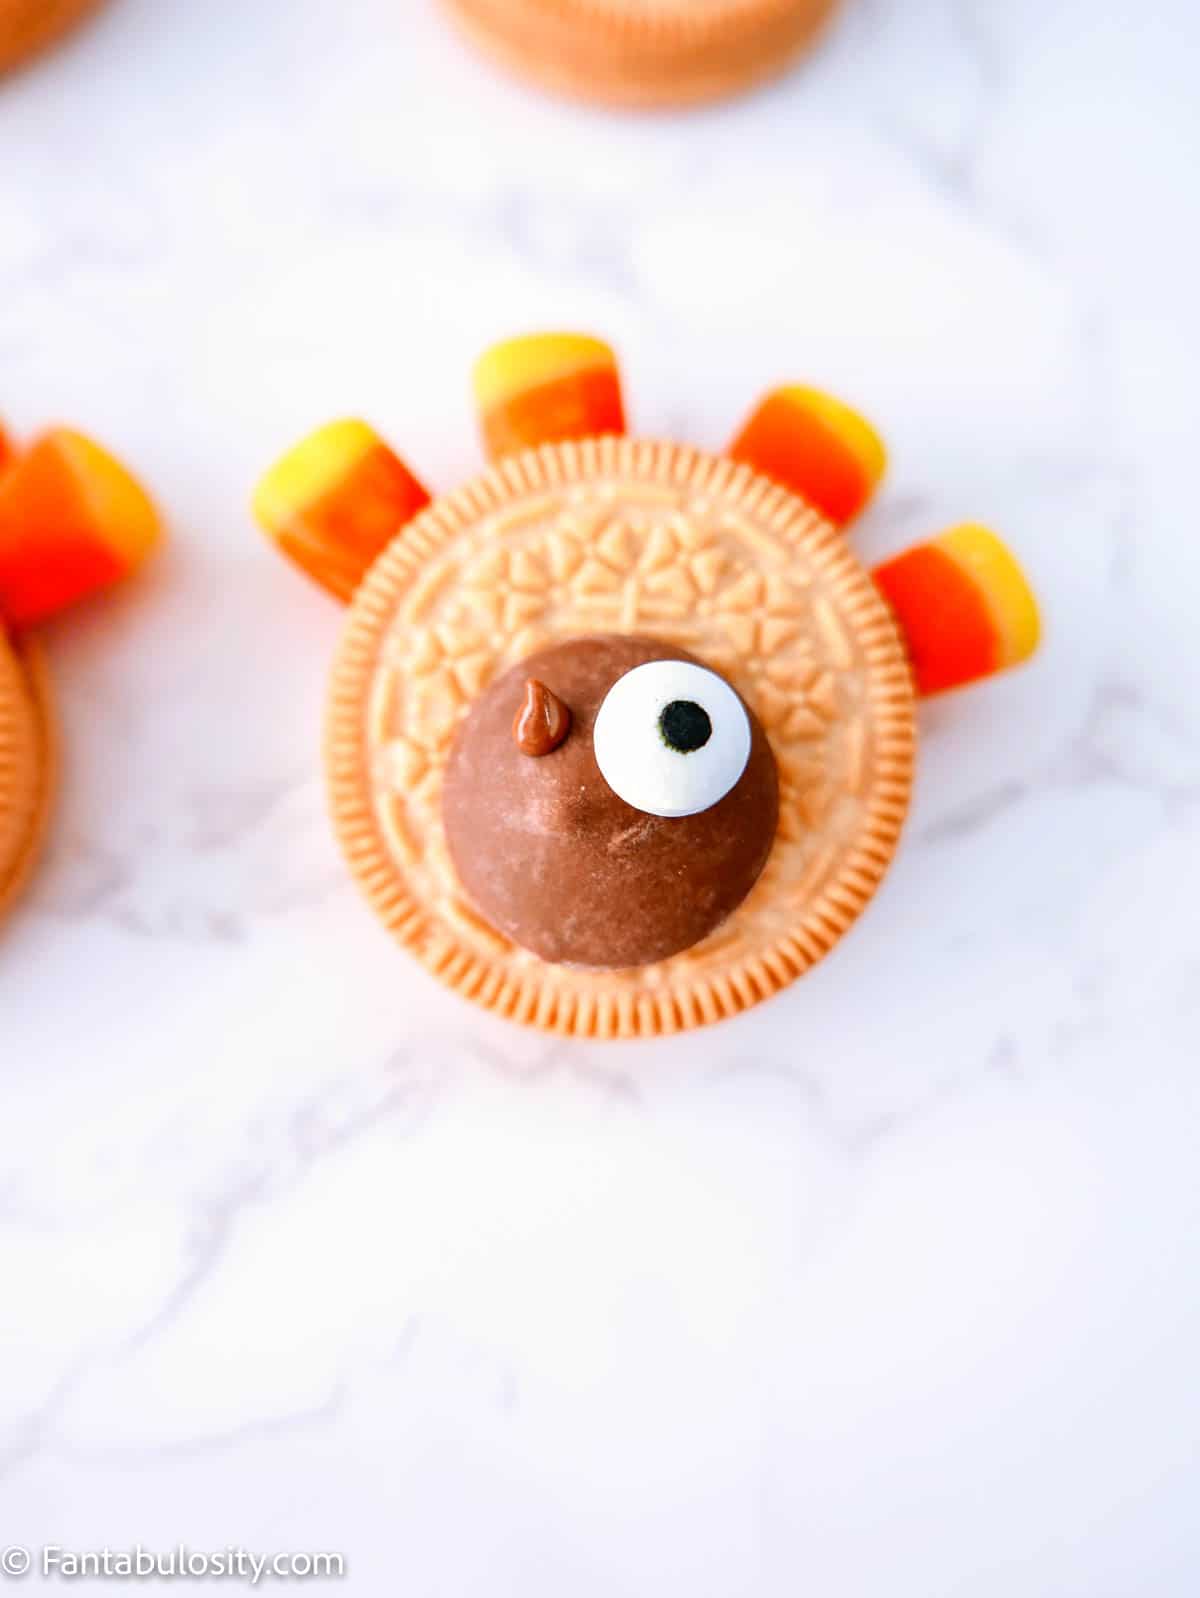 Oreo Turkey Cookie with one eyeball.